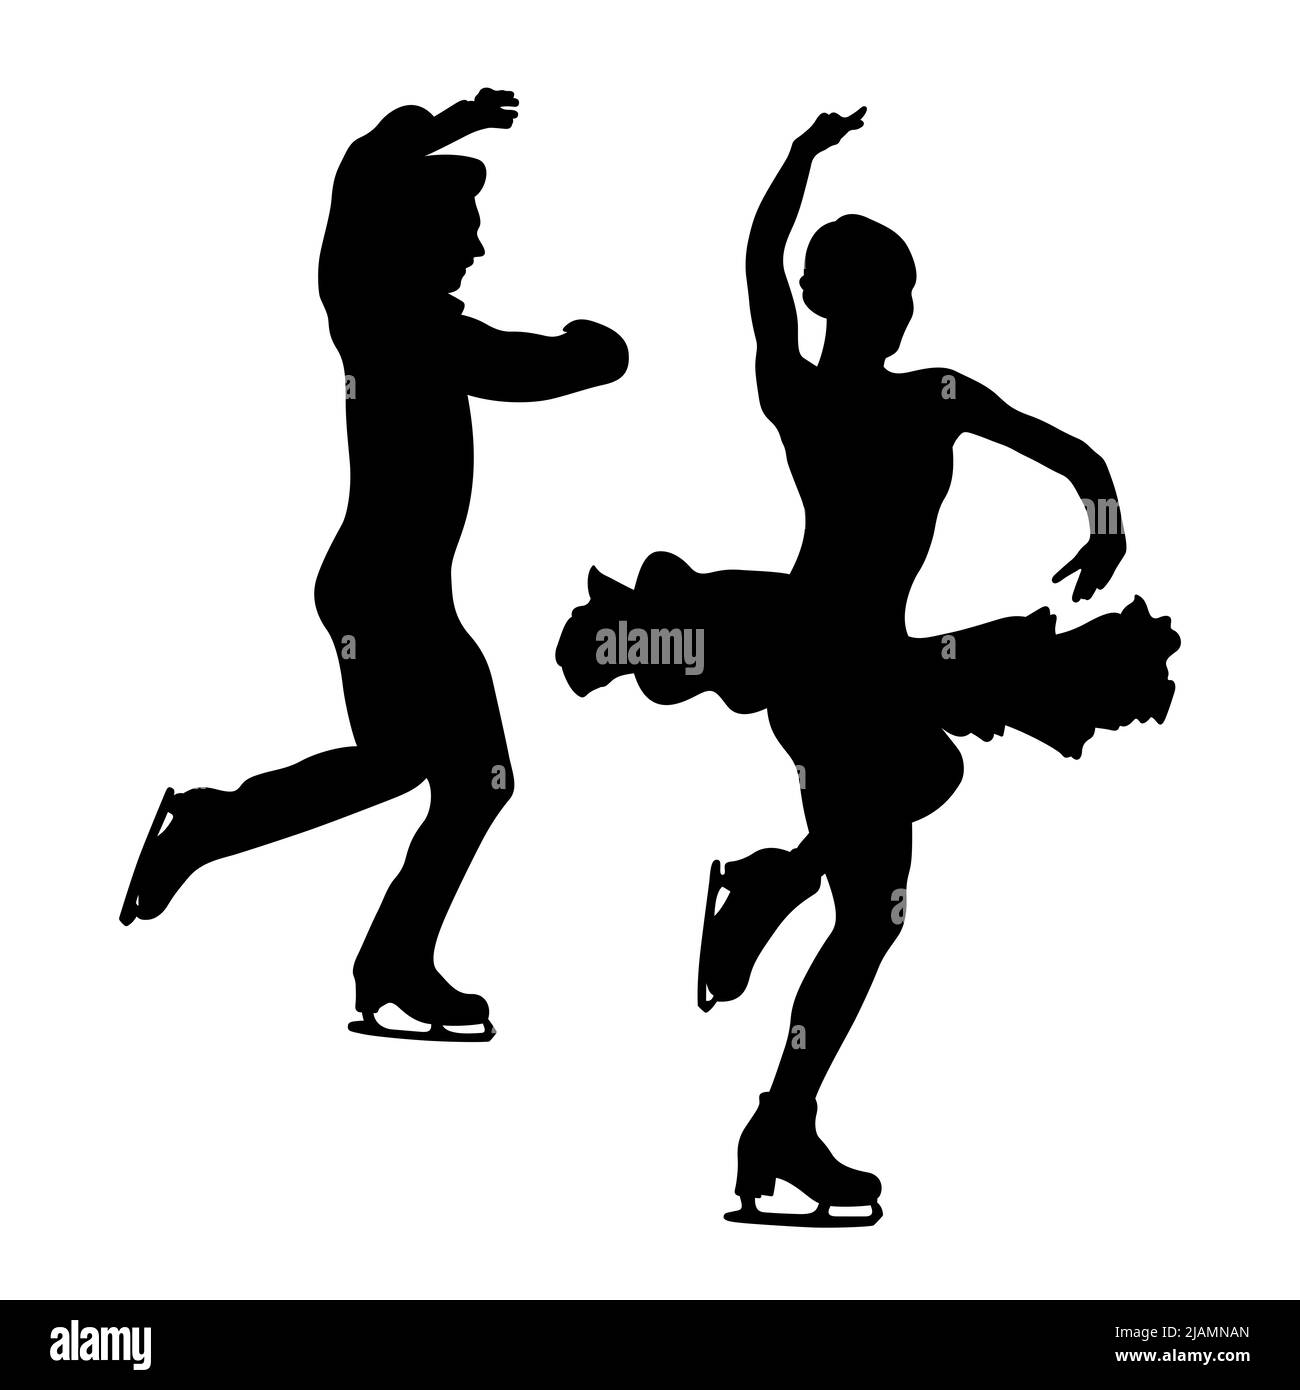 dancing pair of figure skaters black silhouette Stock Photo